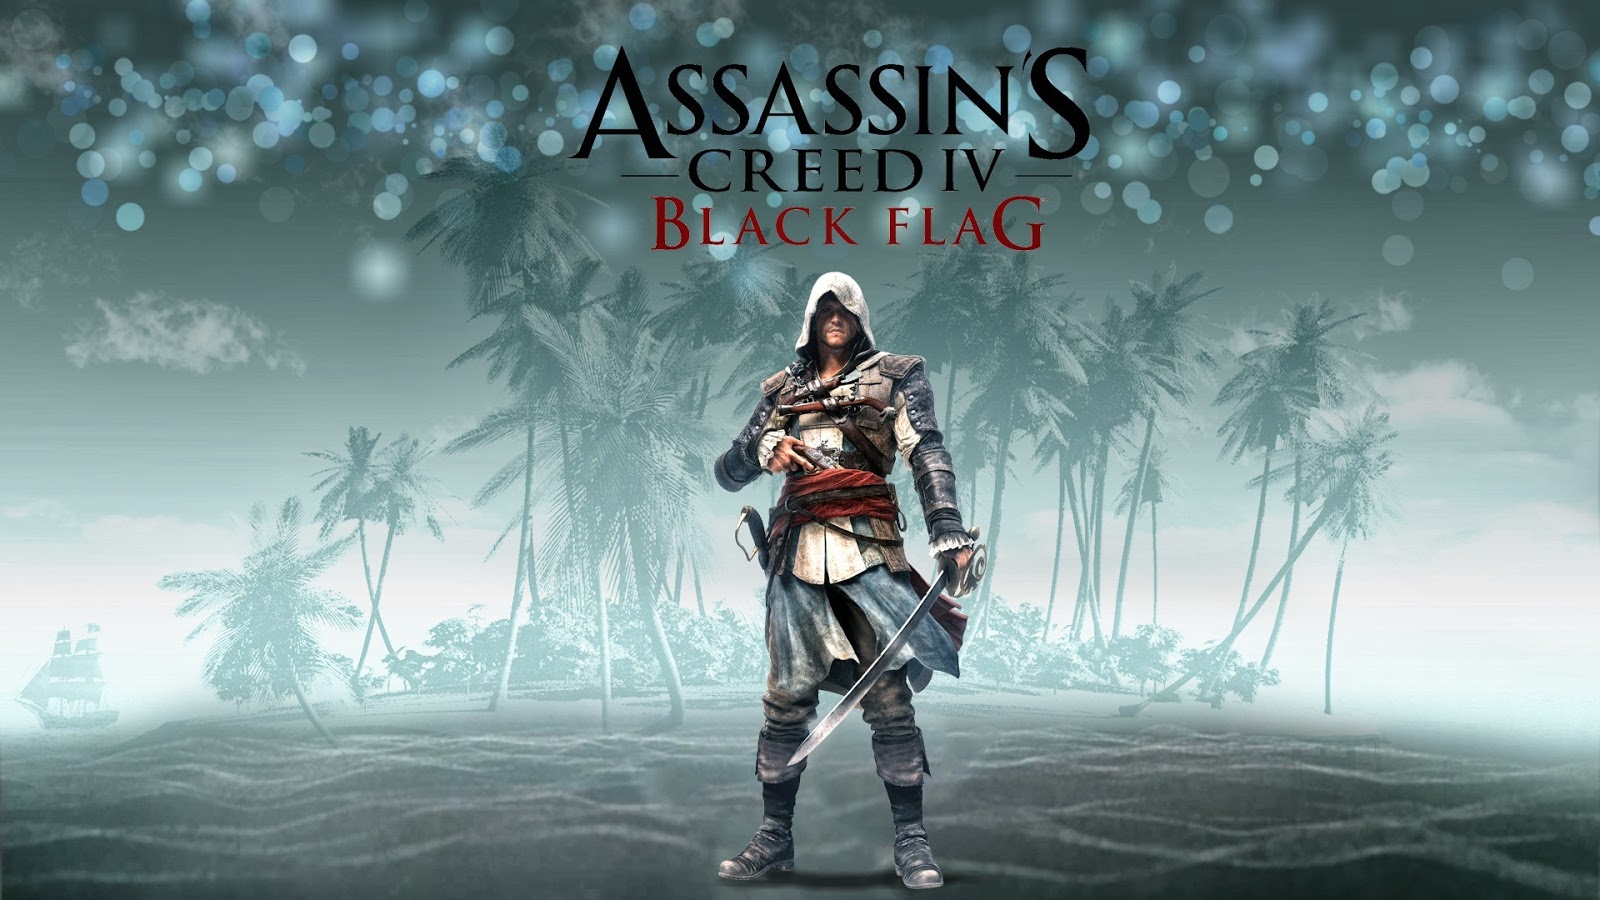 Assassin's Creed IV Black Flag - Nintendo Wii U, Nintendo Wii U